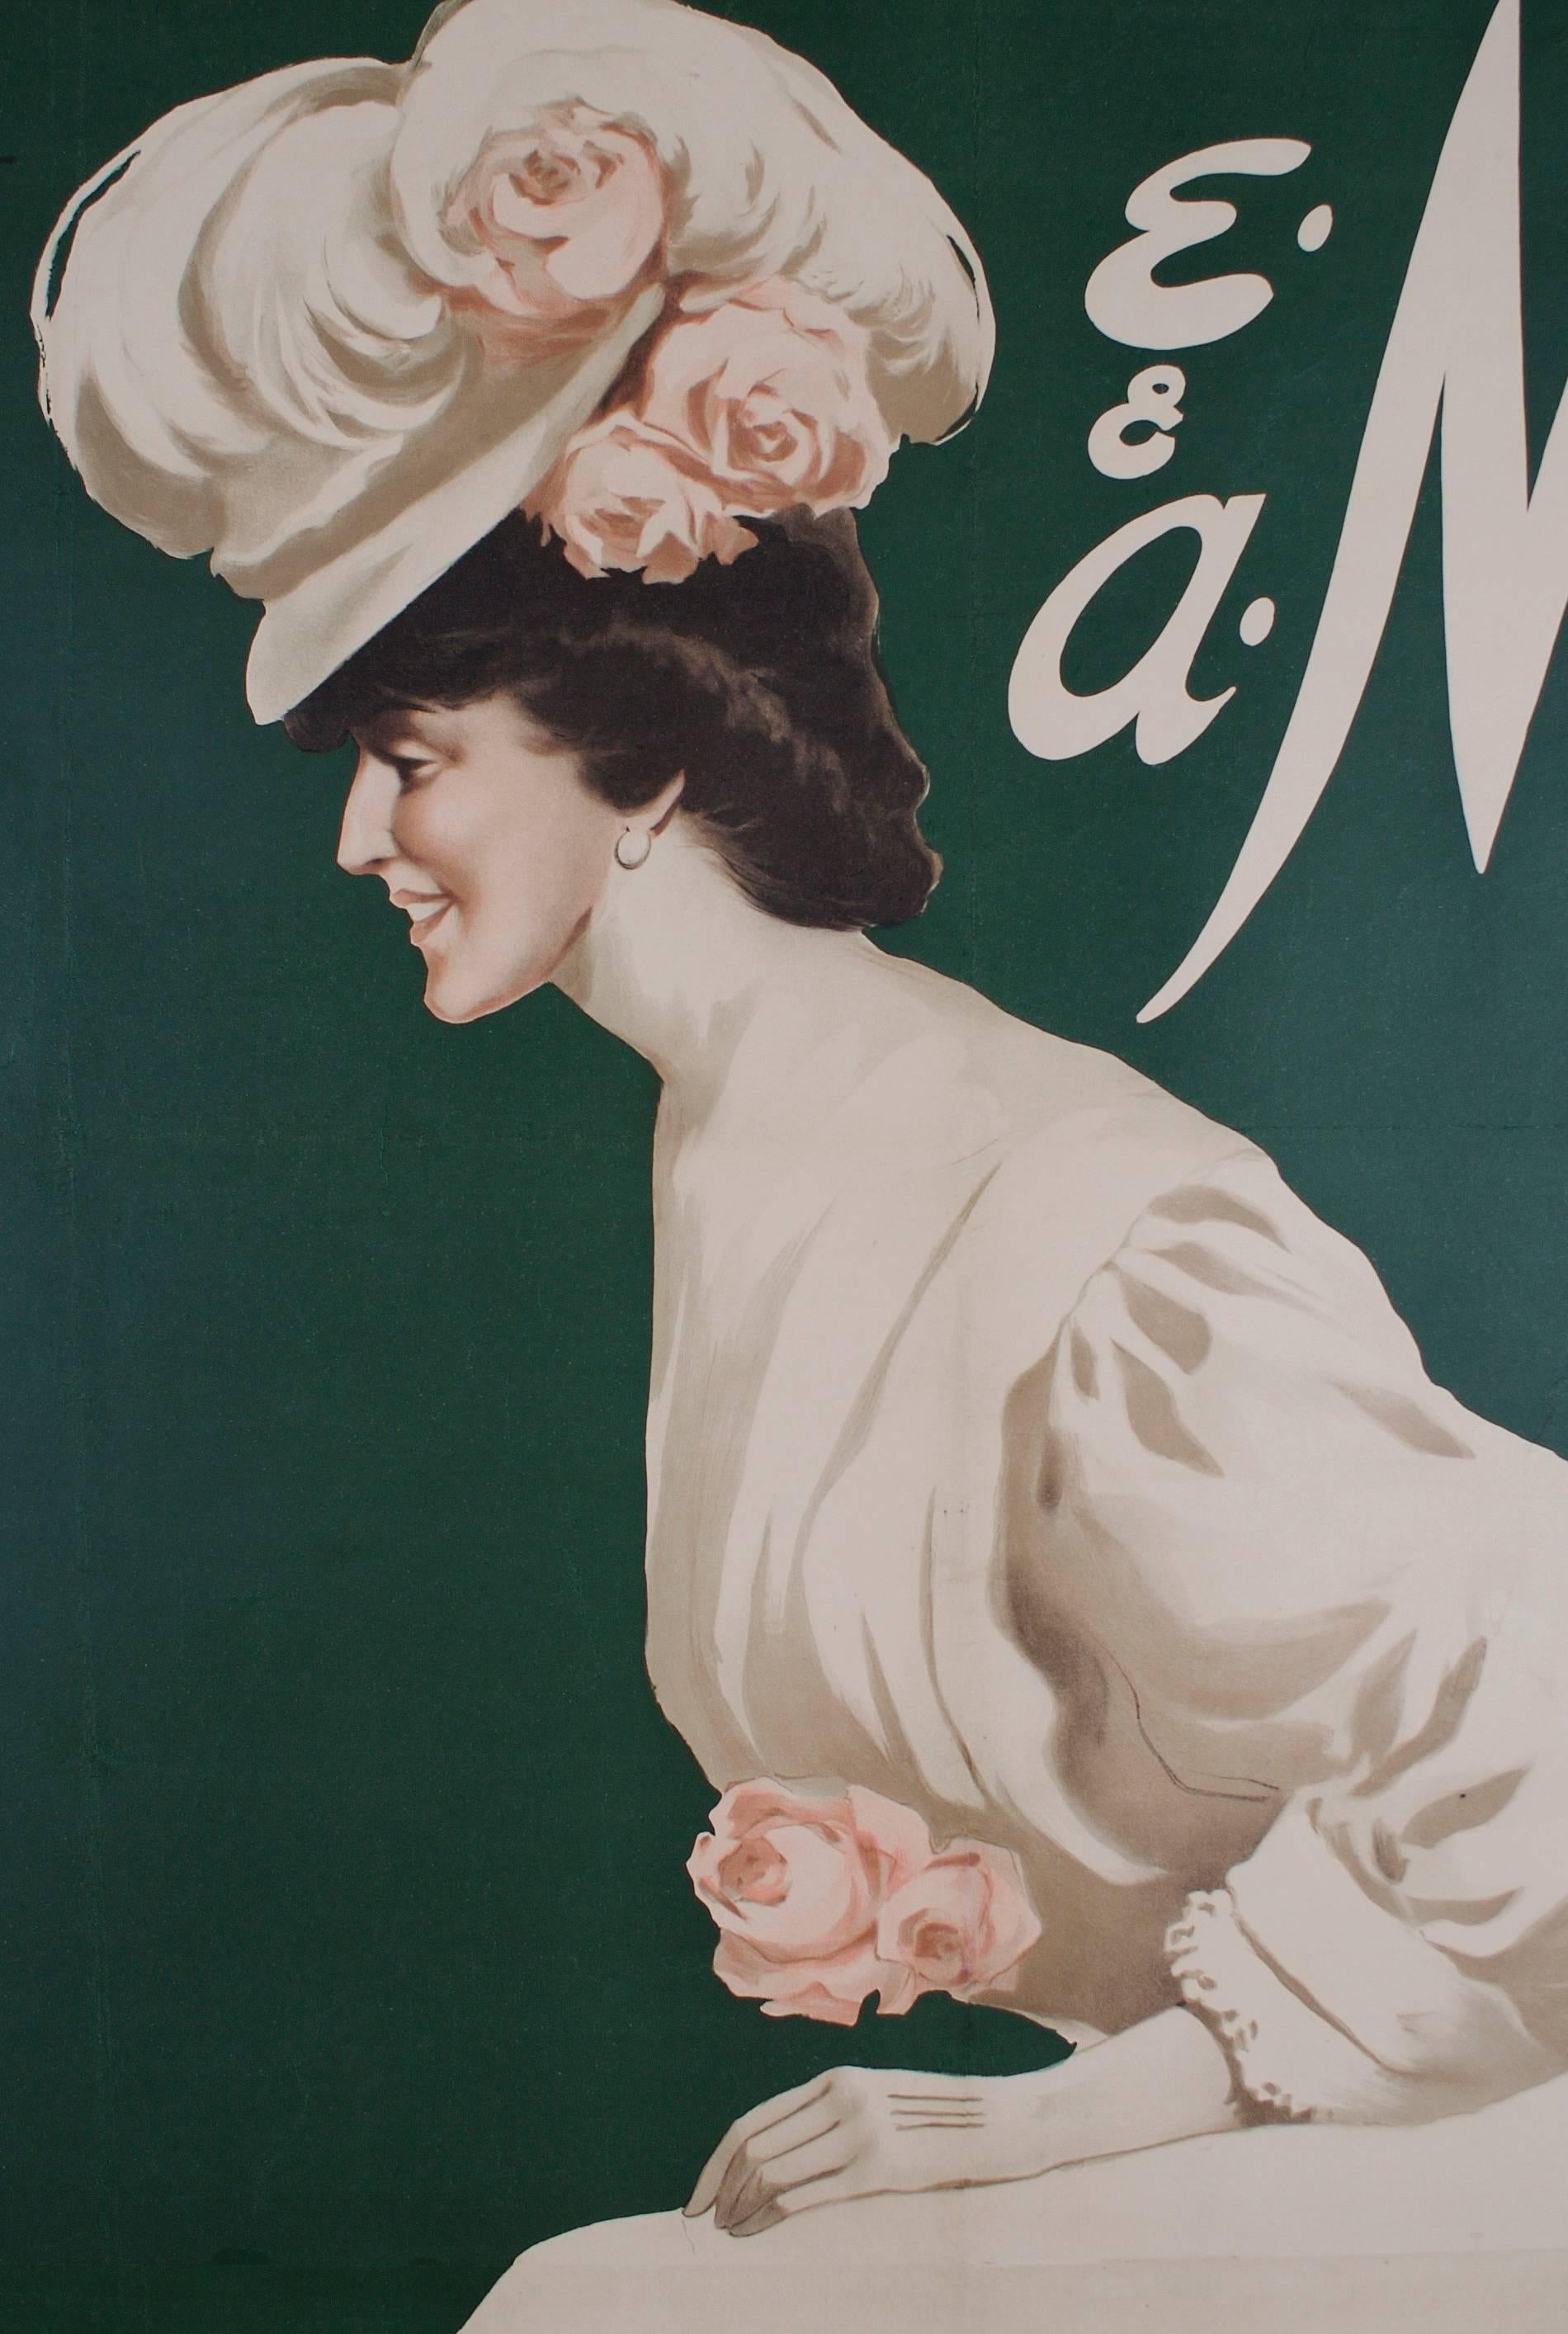 Large Italian Art Nouveau Period Fashion Poster by Gian Emilio Malerba, 1906 For Sale 1